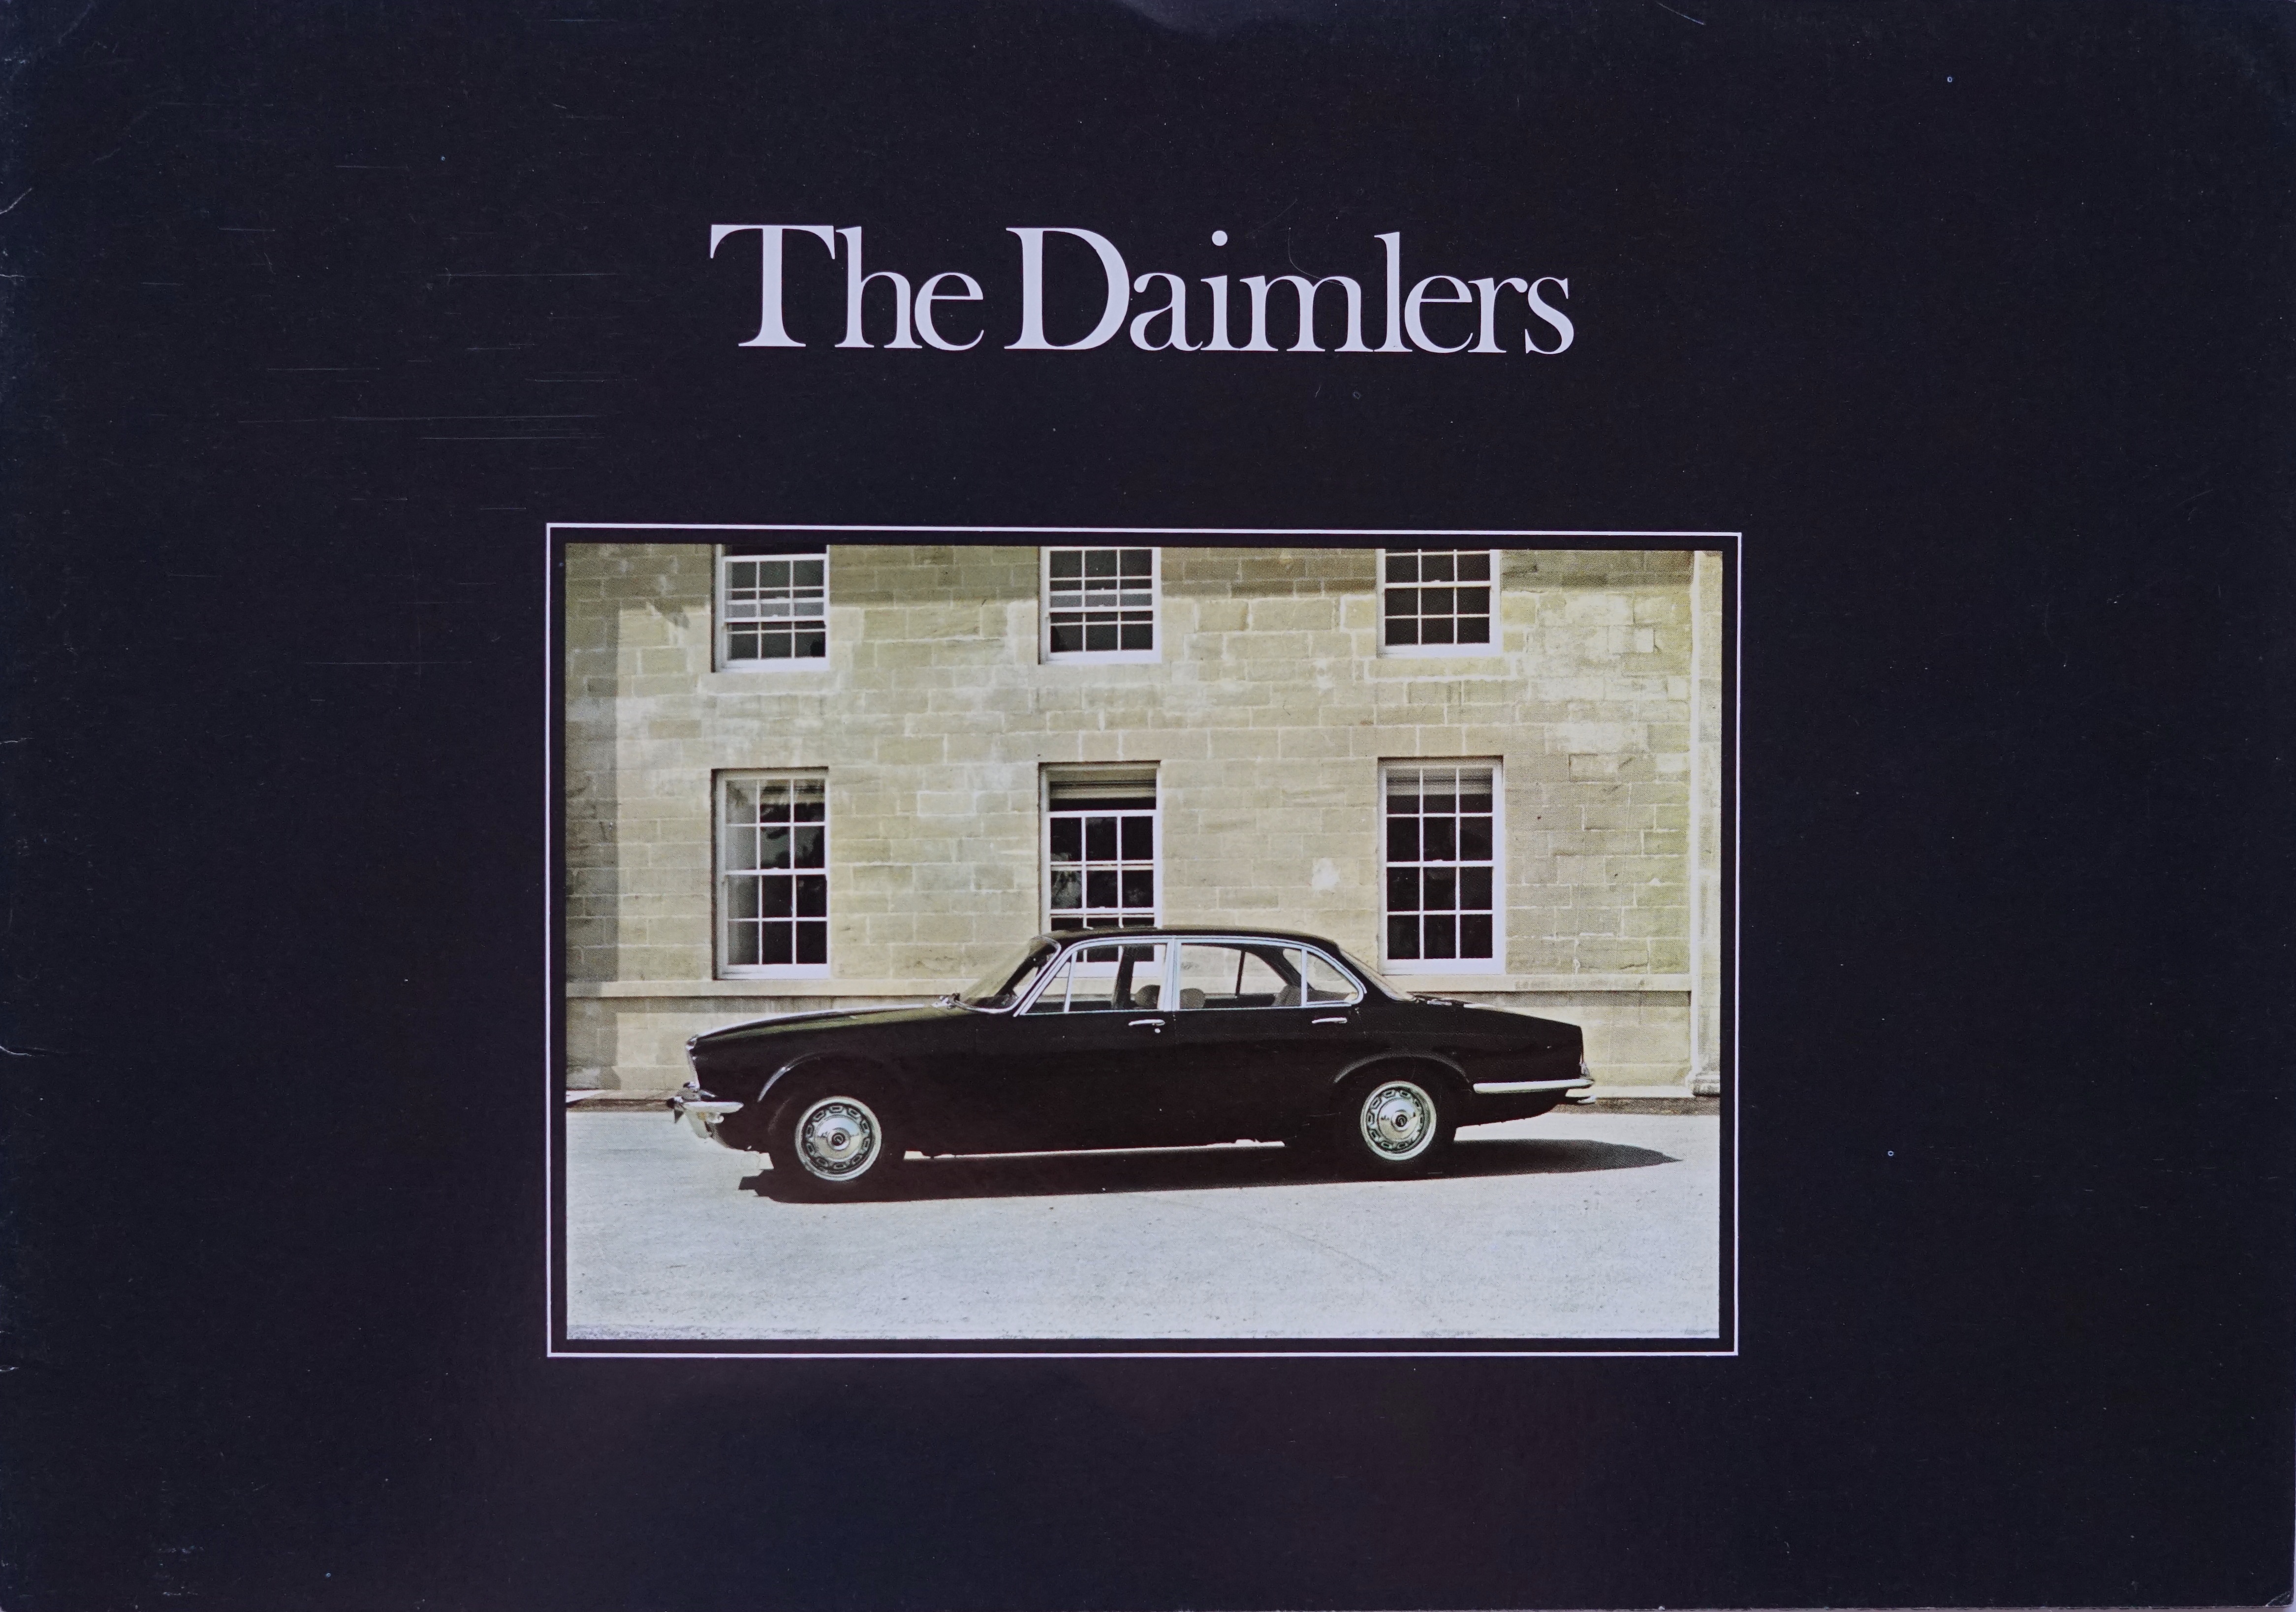 The Daimlers